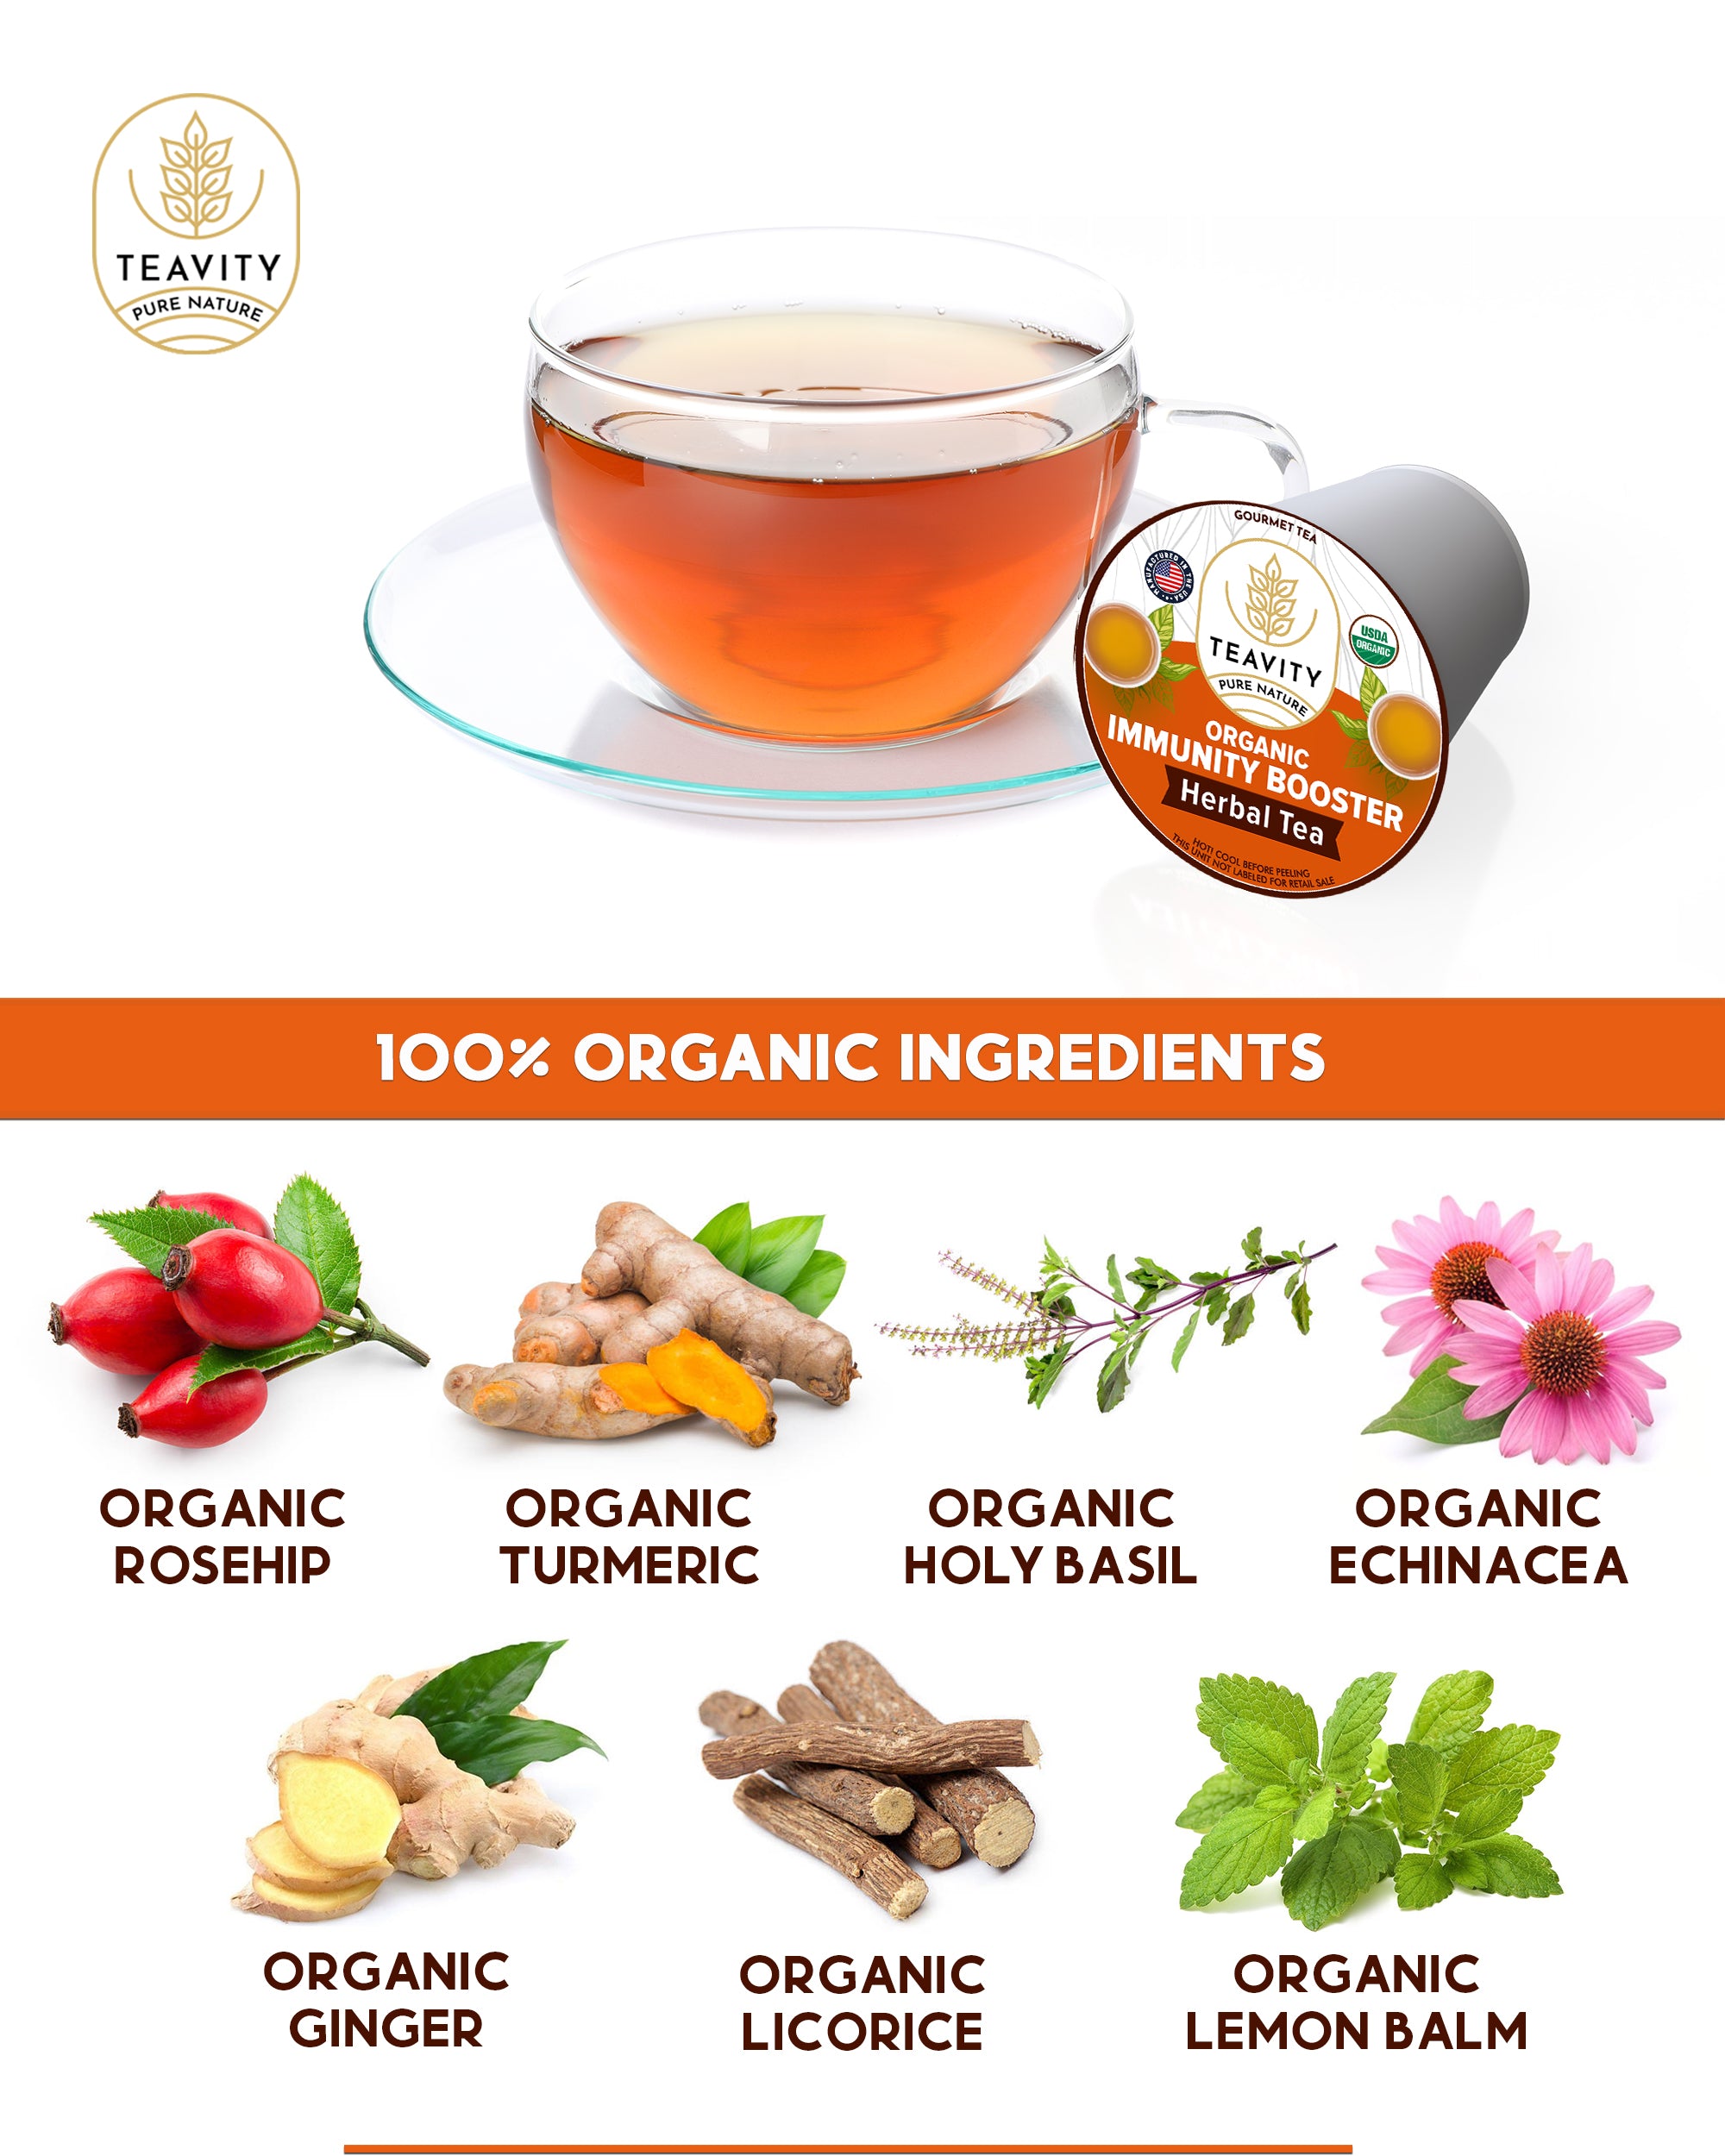 Organic Immunity Booster Tea